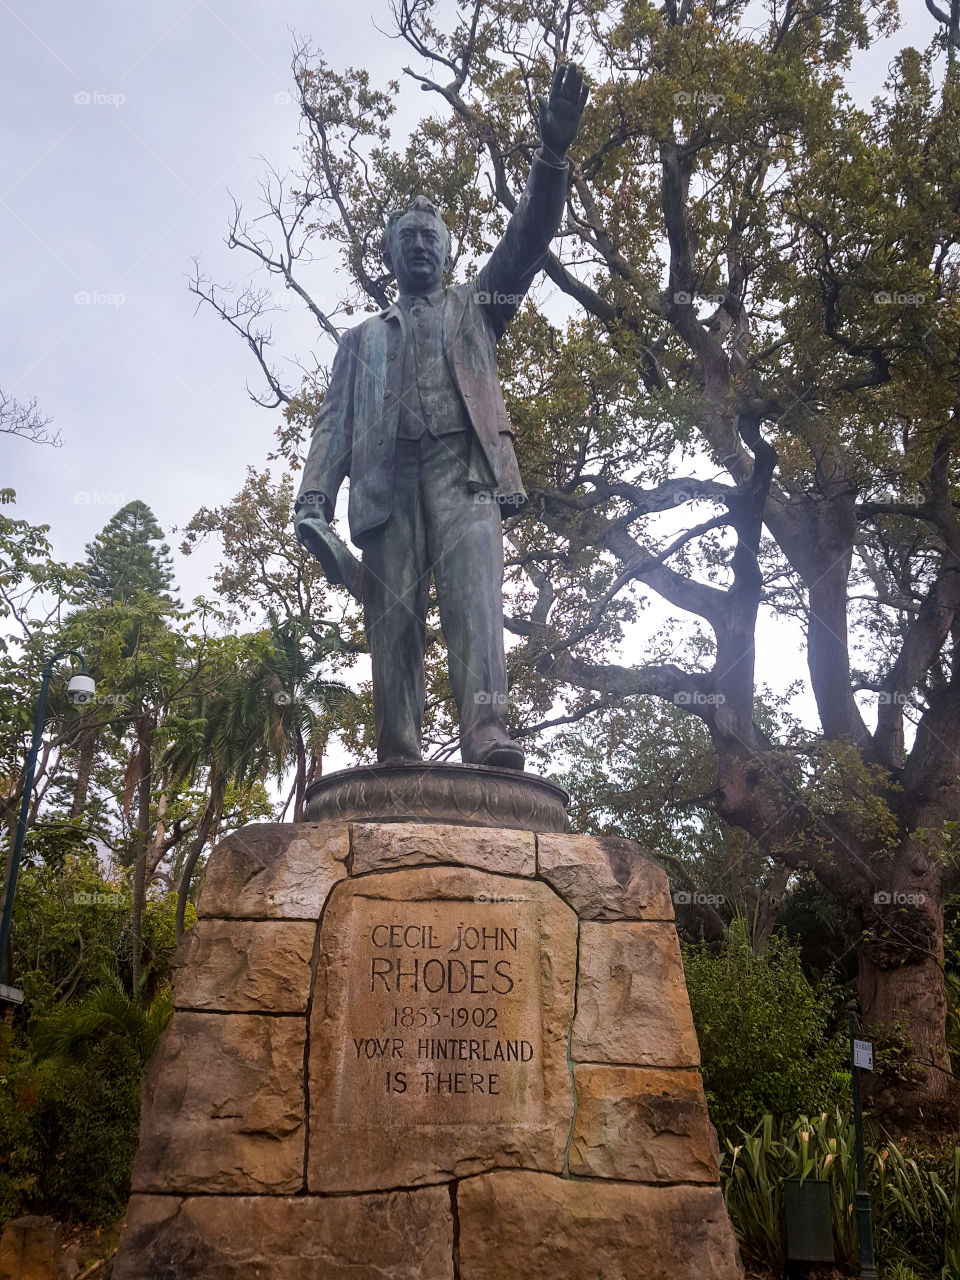 Cecil John Rhodes statue